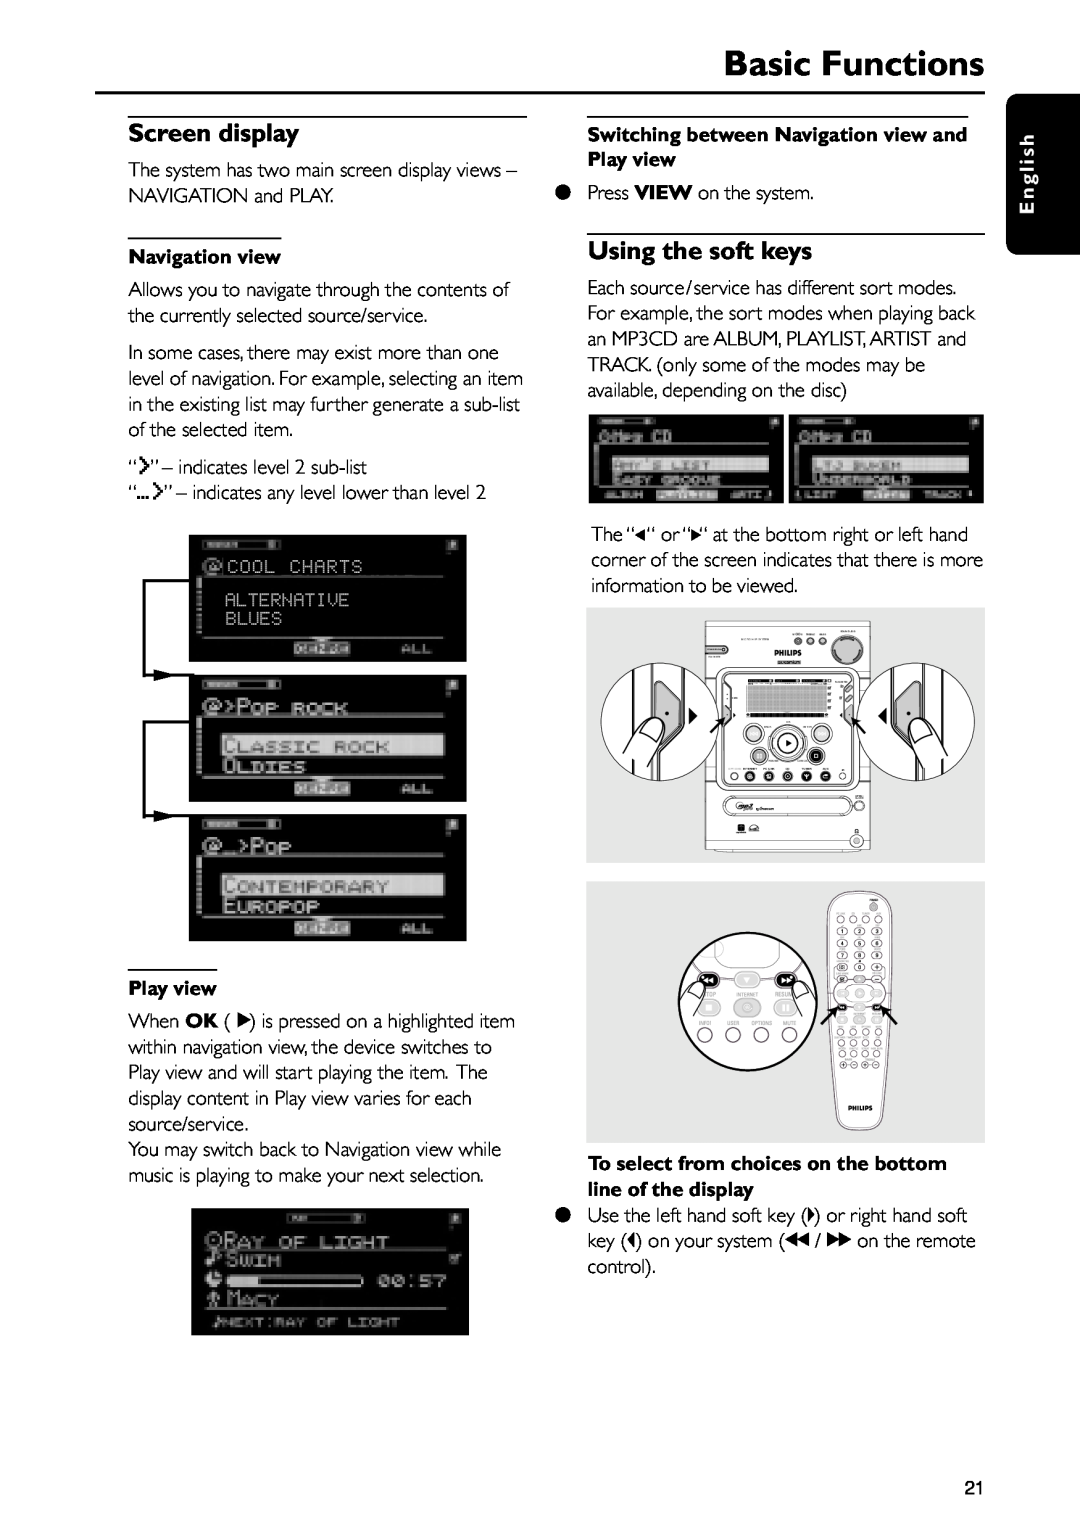 Philips MC-i250 Screen display, Using the soft keys, Basic Functions, Navigation view, Cool Charts Alternative Blues 